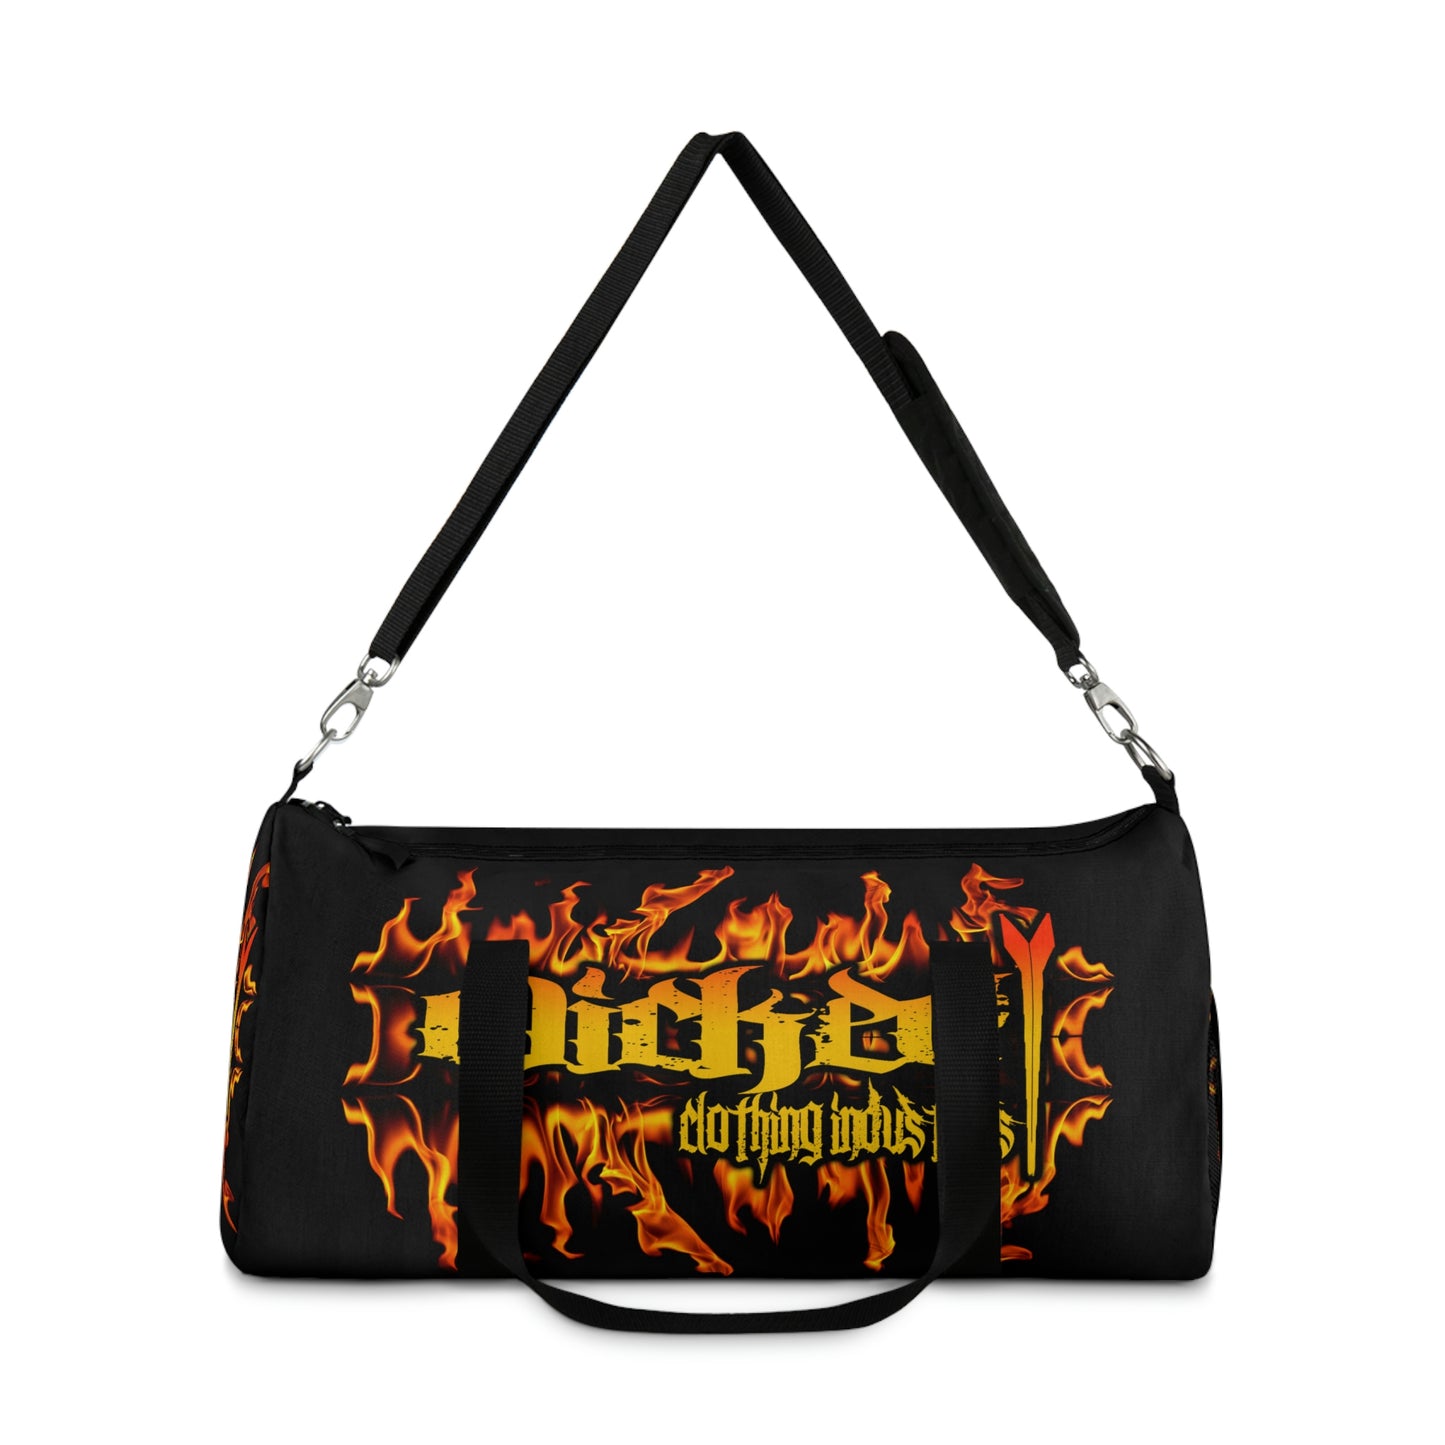 Wicked Flamed Duffel Bag